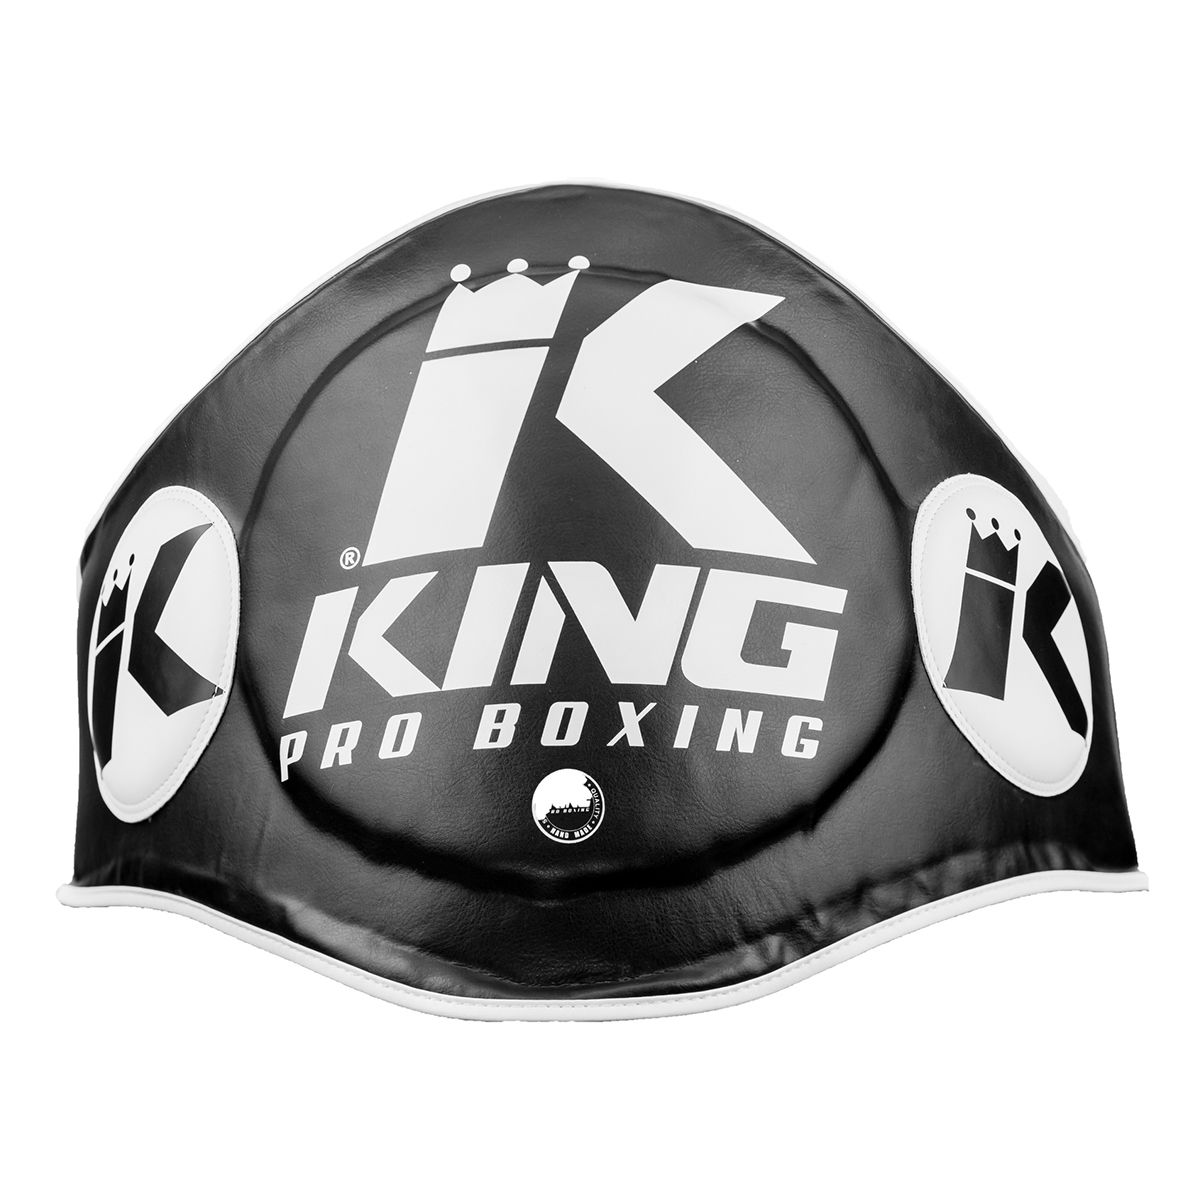 Ceinture abdominale King pro boxing